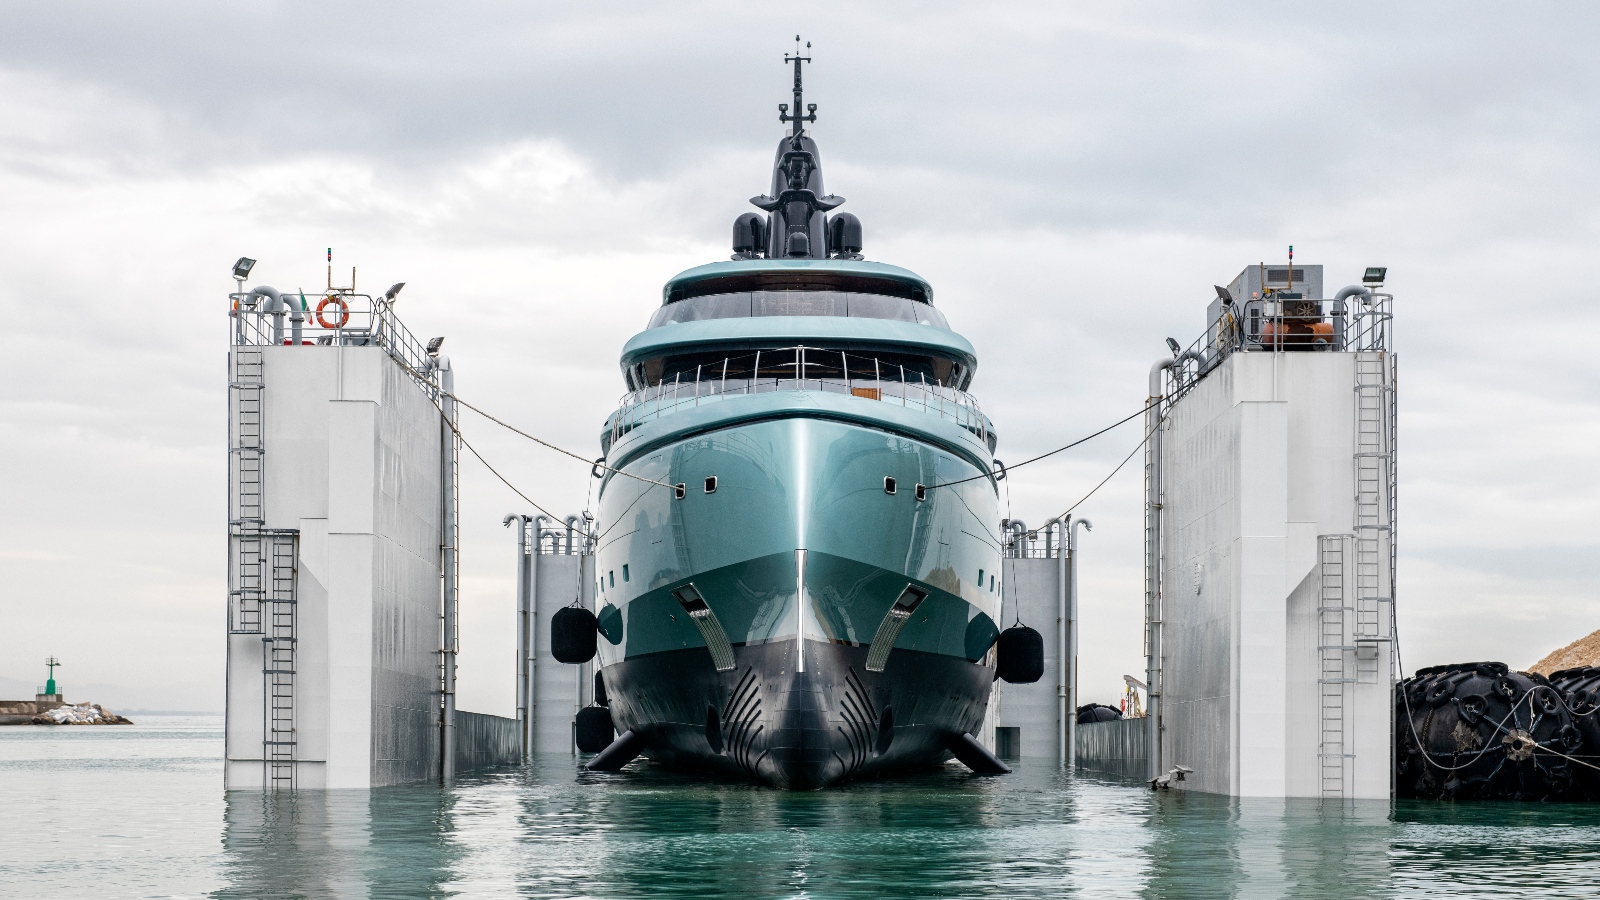 Motor Yacht KENSHO Launched - The Italian Sea Group 